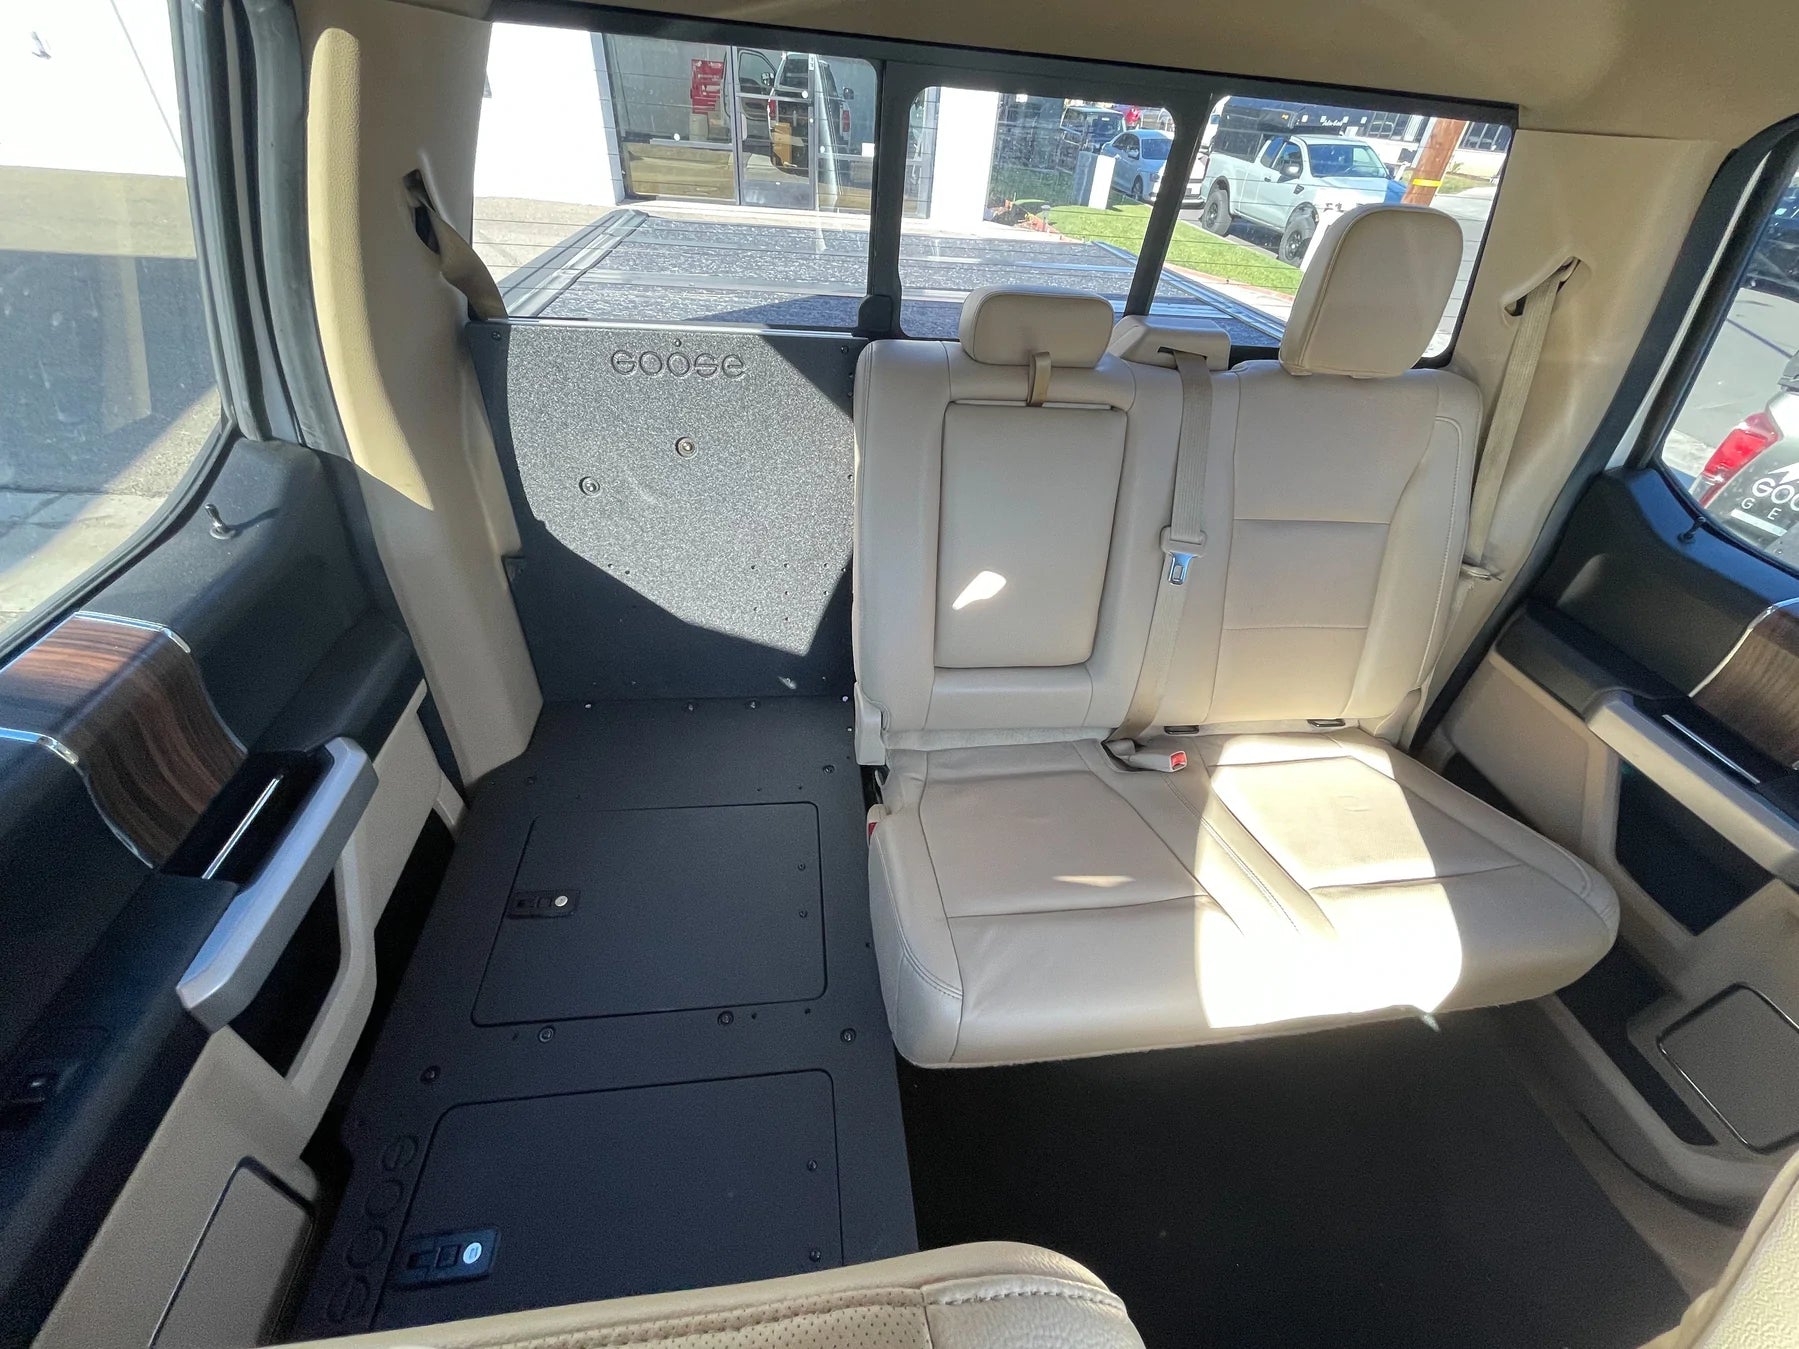 Ford Super Duty F250, F350, F450, & F550 2017-Present 4th Gen Crew Cab - Second Row Seat Delete Plate System